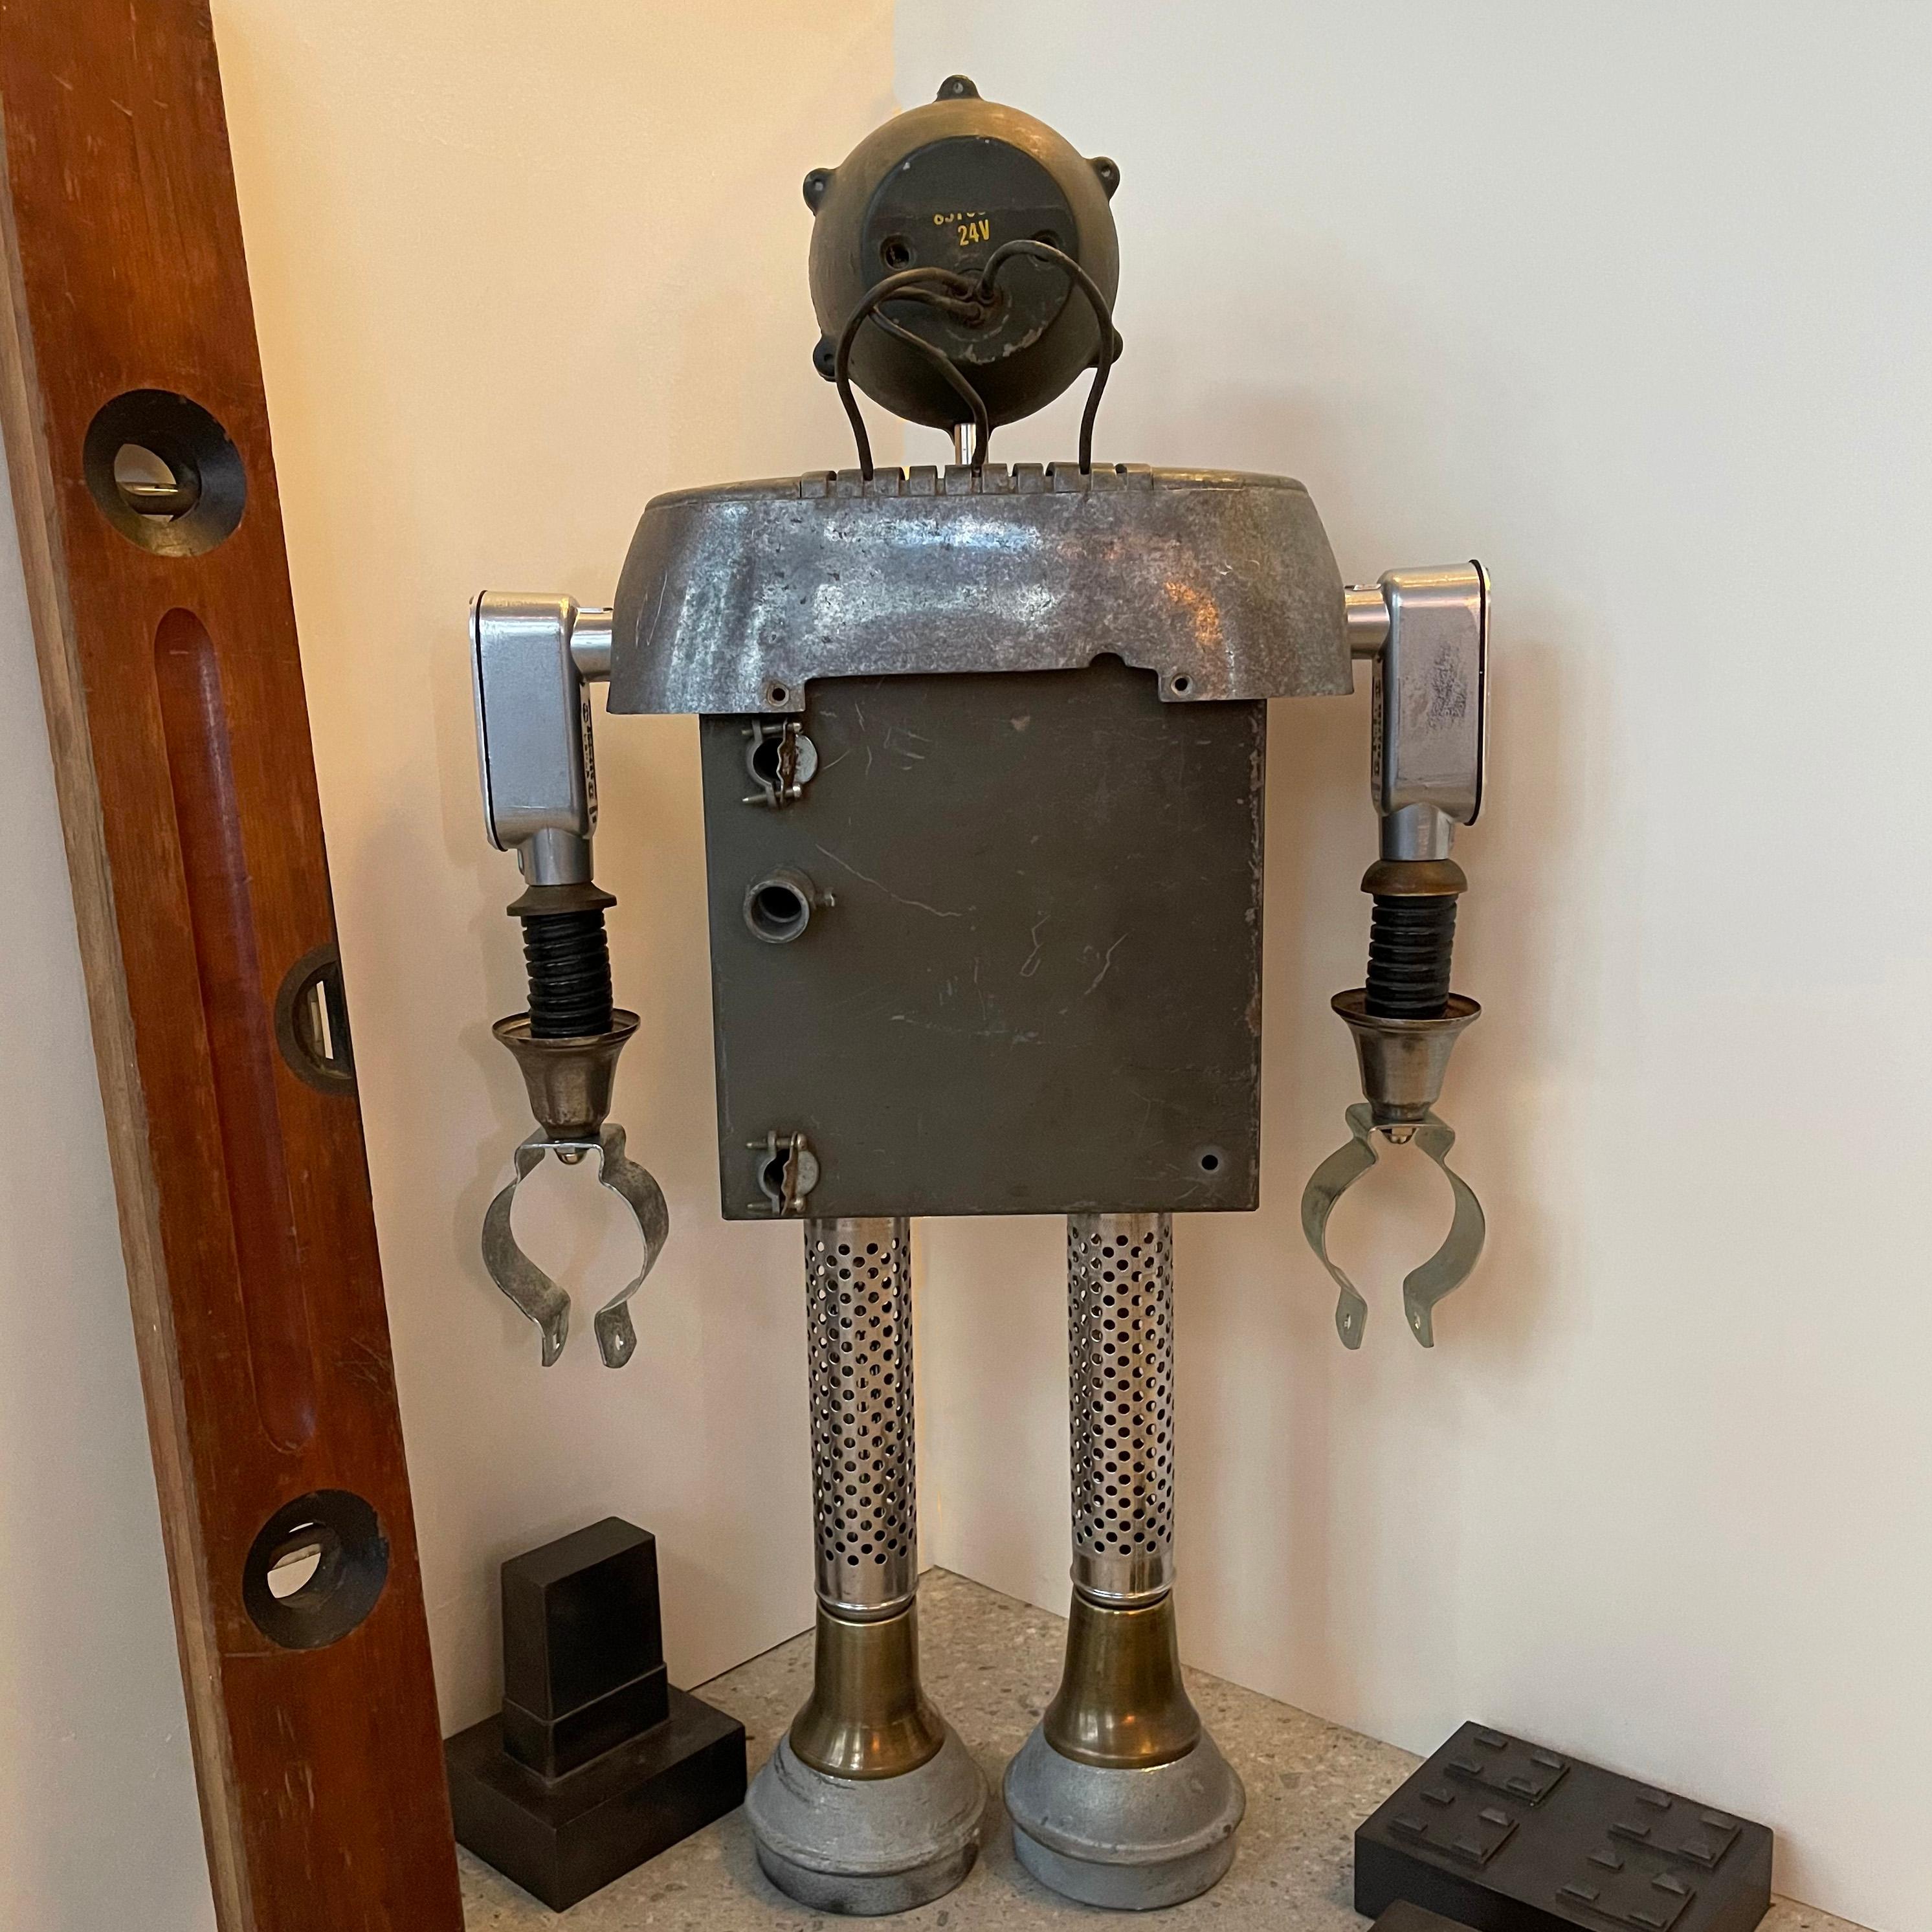 Hand-Crafted R.R. Robot Sculpture by Bennett Robot Works